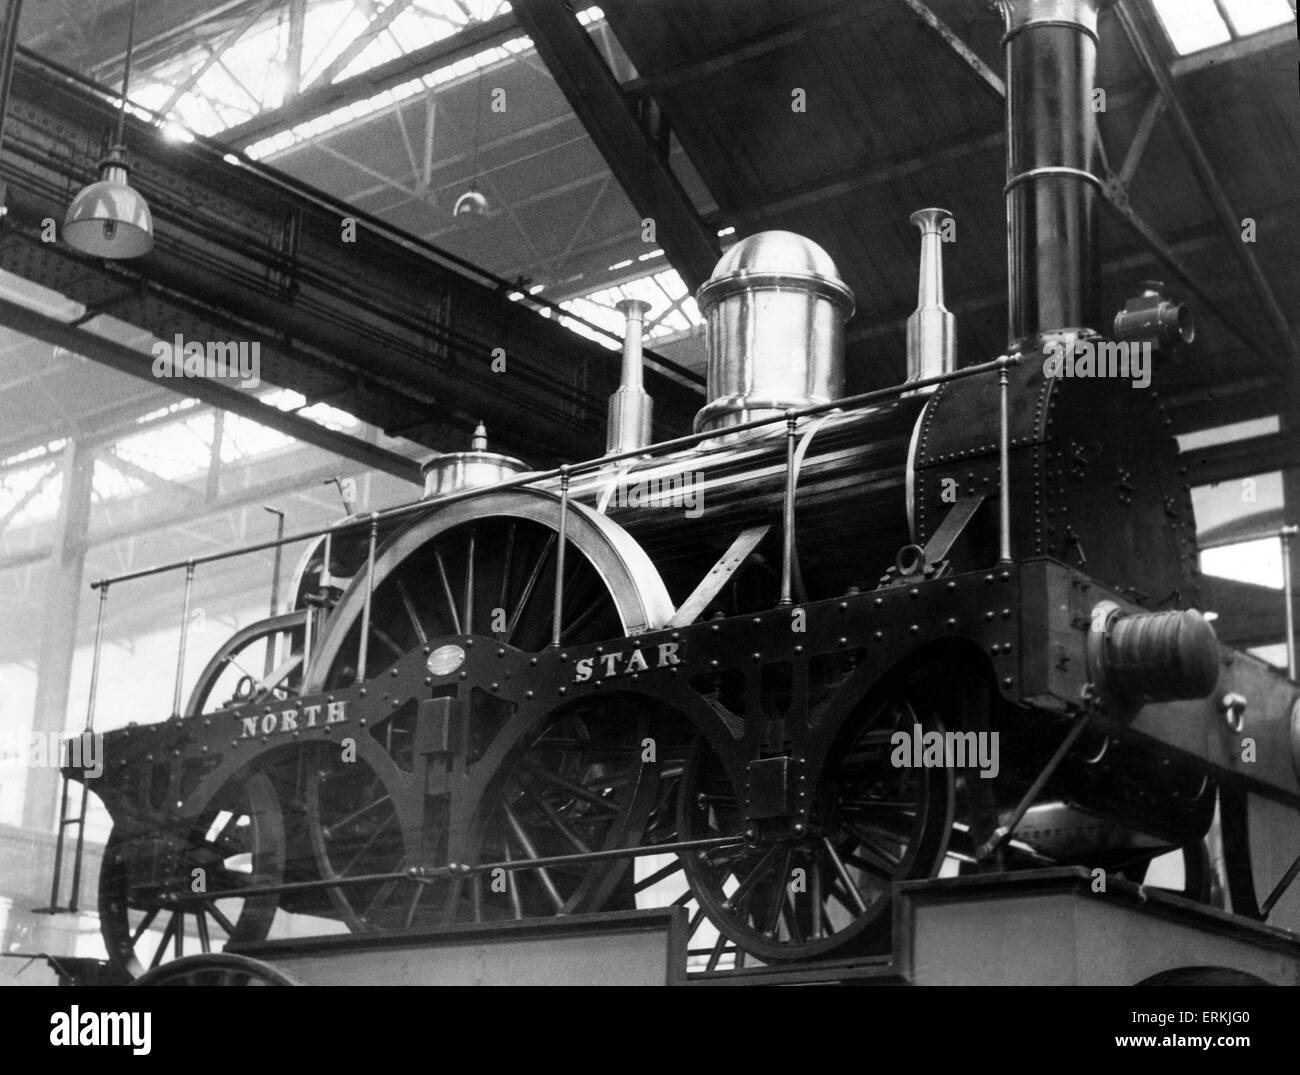 La Great Western Railway (GWR) Classe Star North Star locomotiva a vapore costruita da Robert Louis Stephenson nel 1837, sul display a Swindon. Marzo 1960. Foto Stock